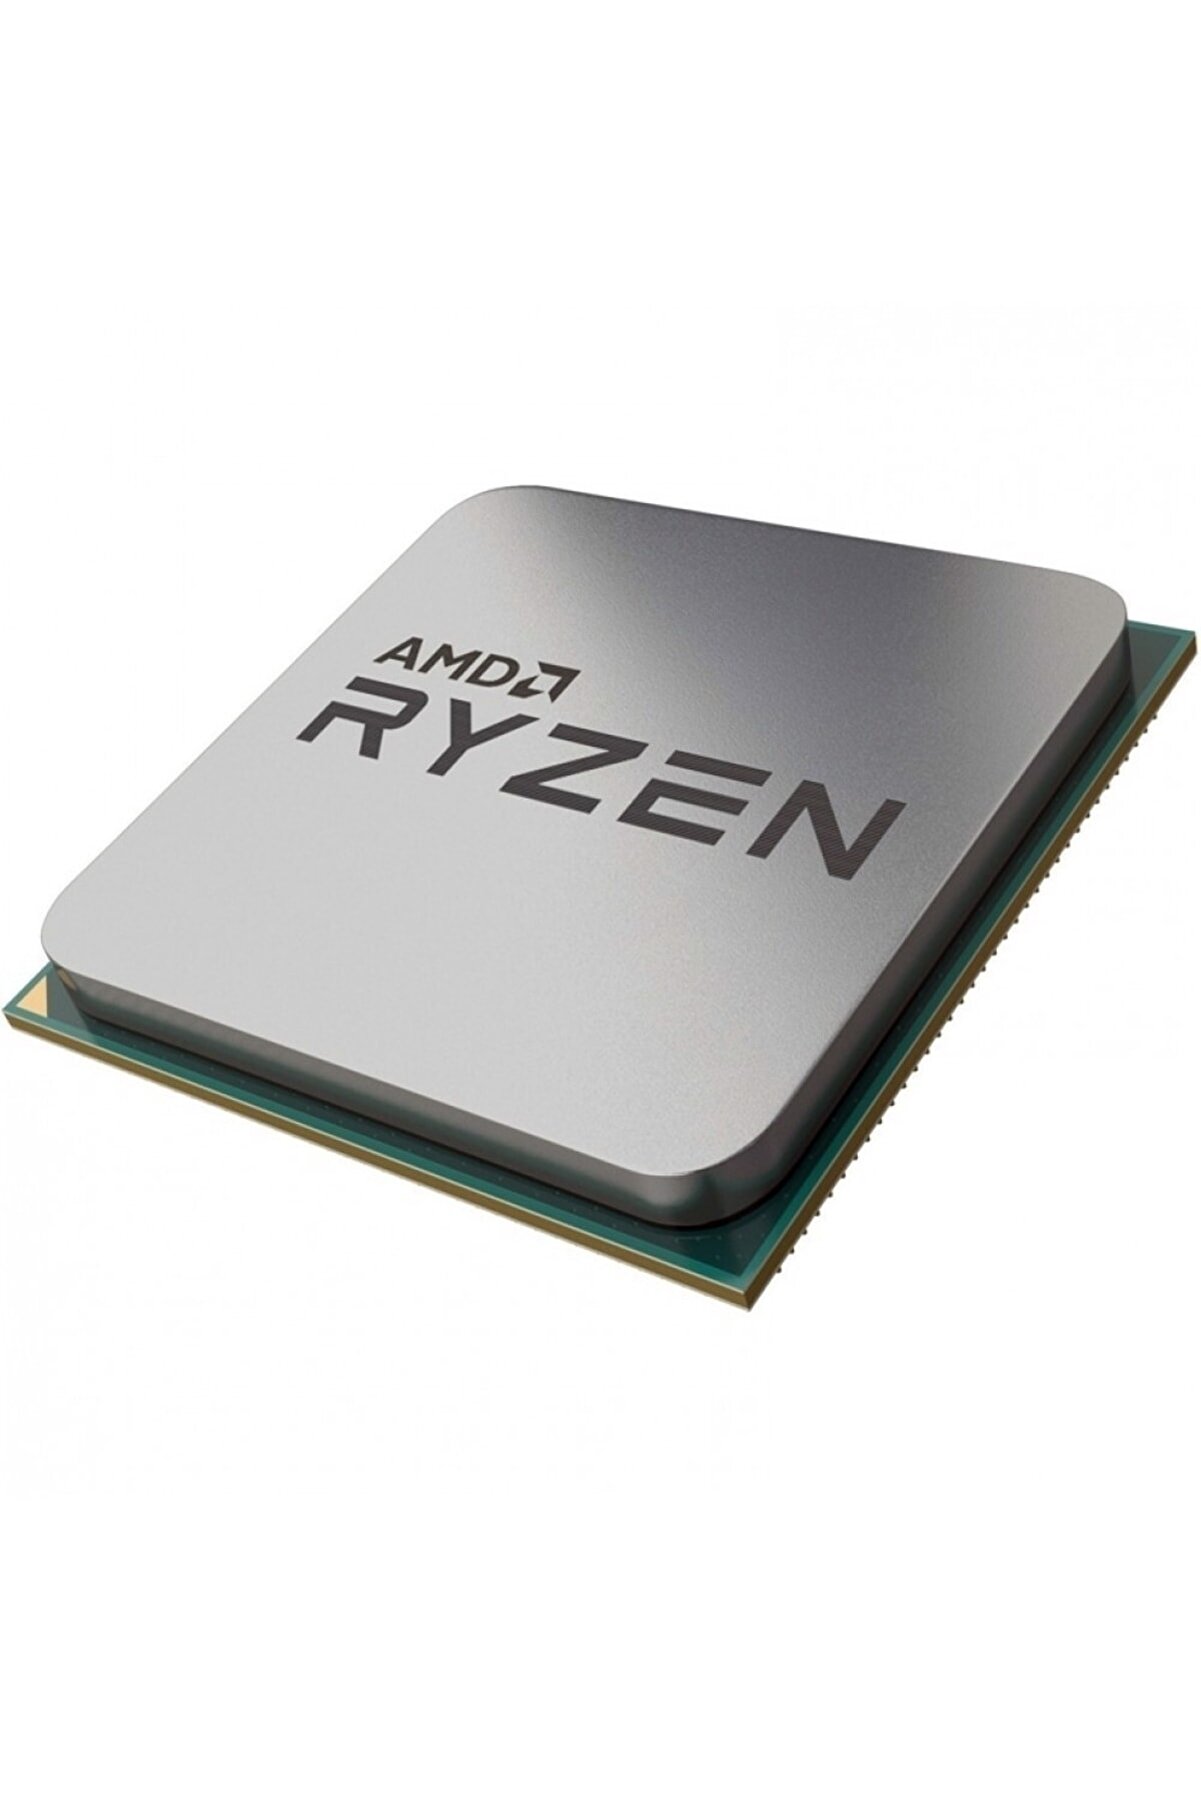 Amd Ryzen™ 5 4500 3.6ghz (turbo 4.1ghz) 6 Core 12 Threads 11mb Cache Am4 Işlemci